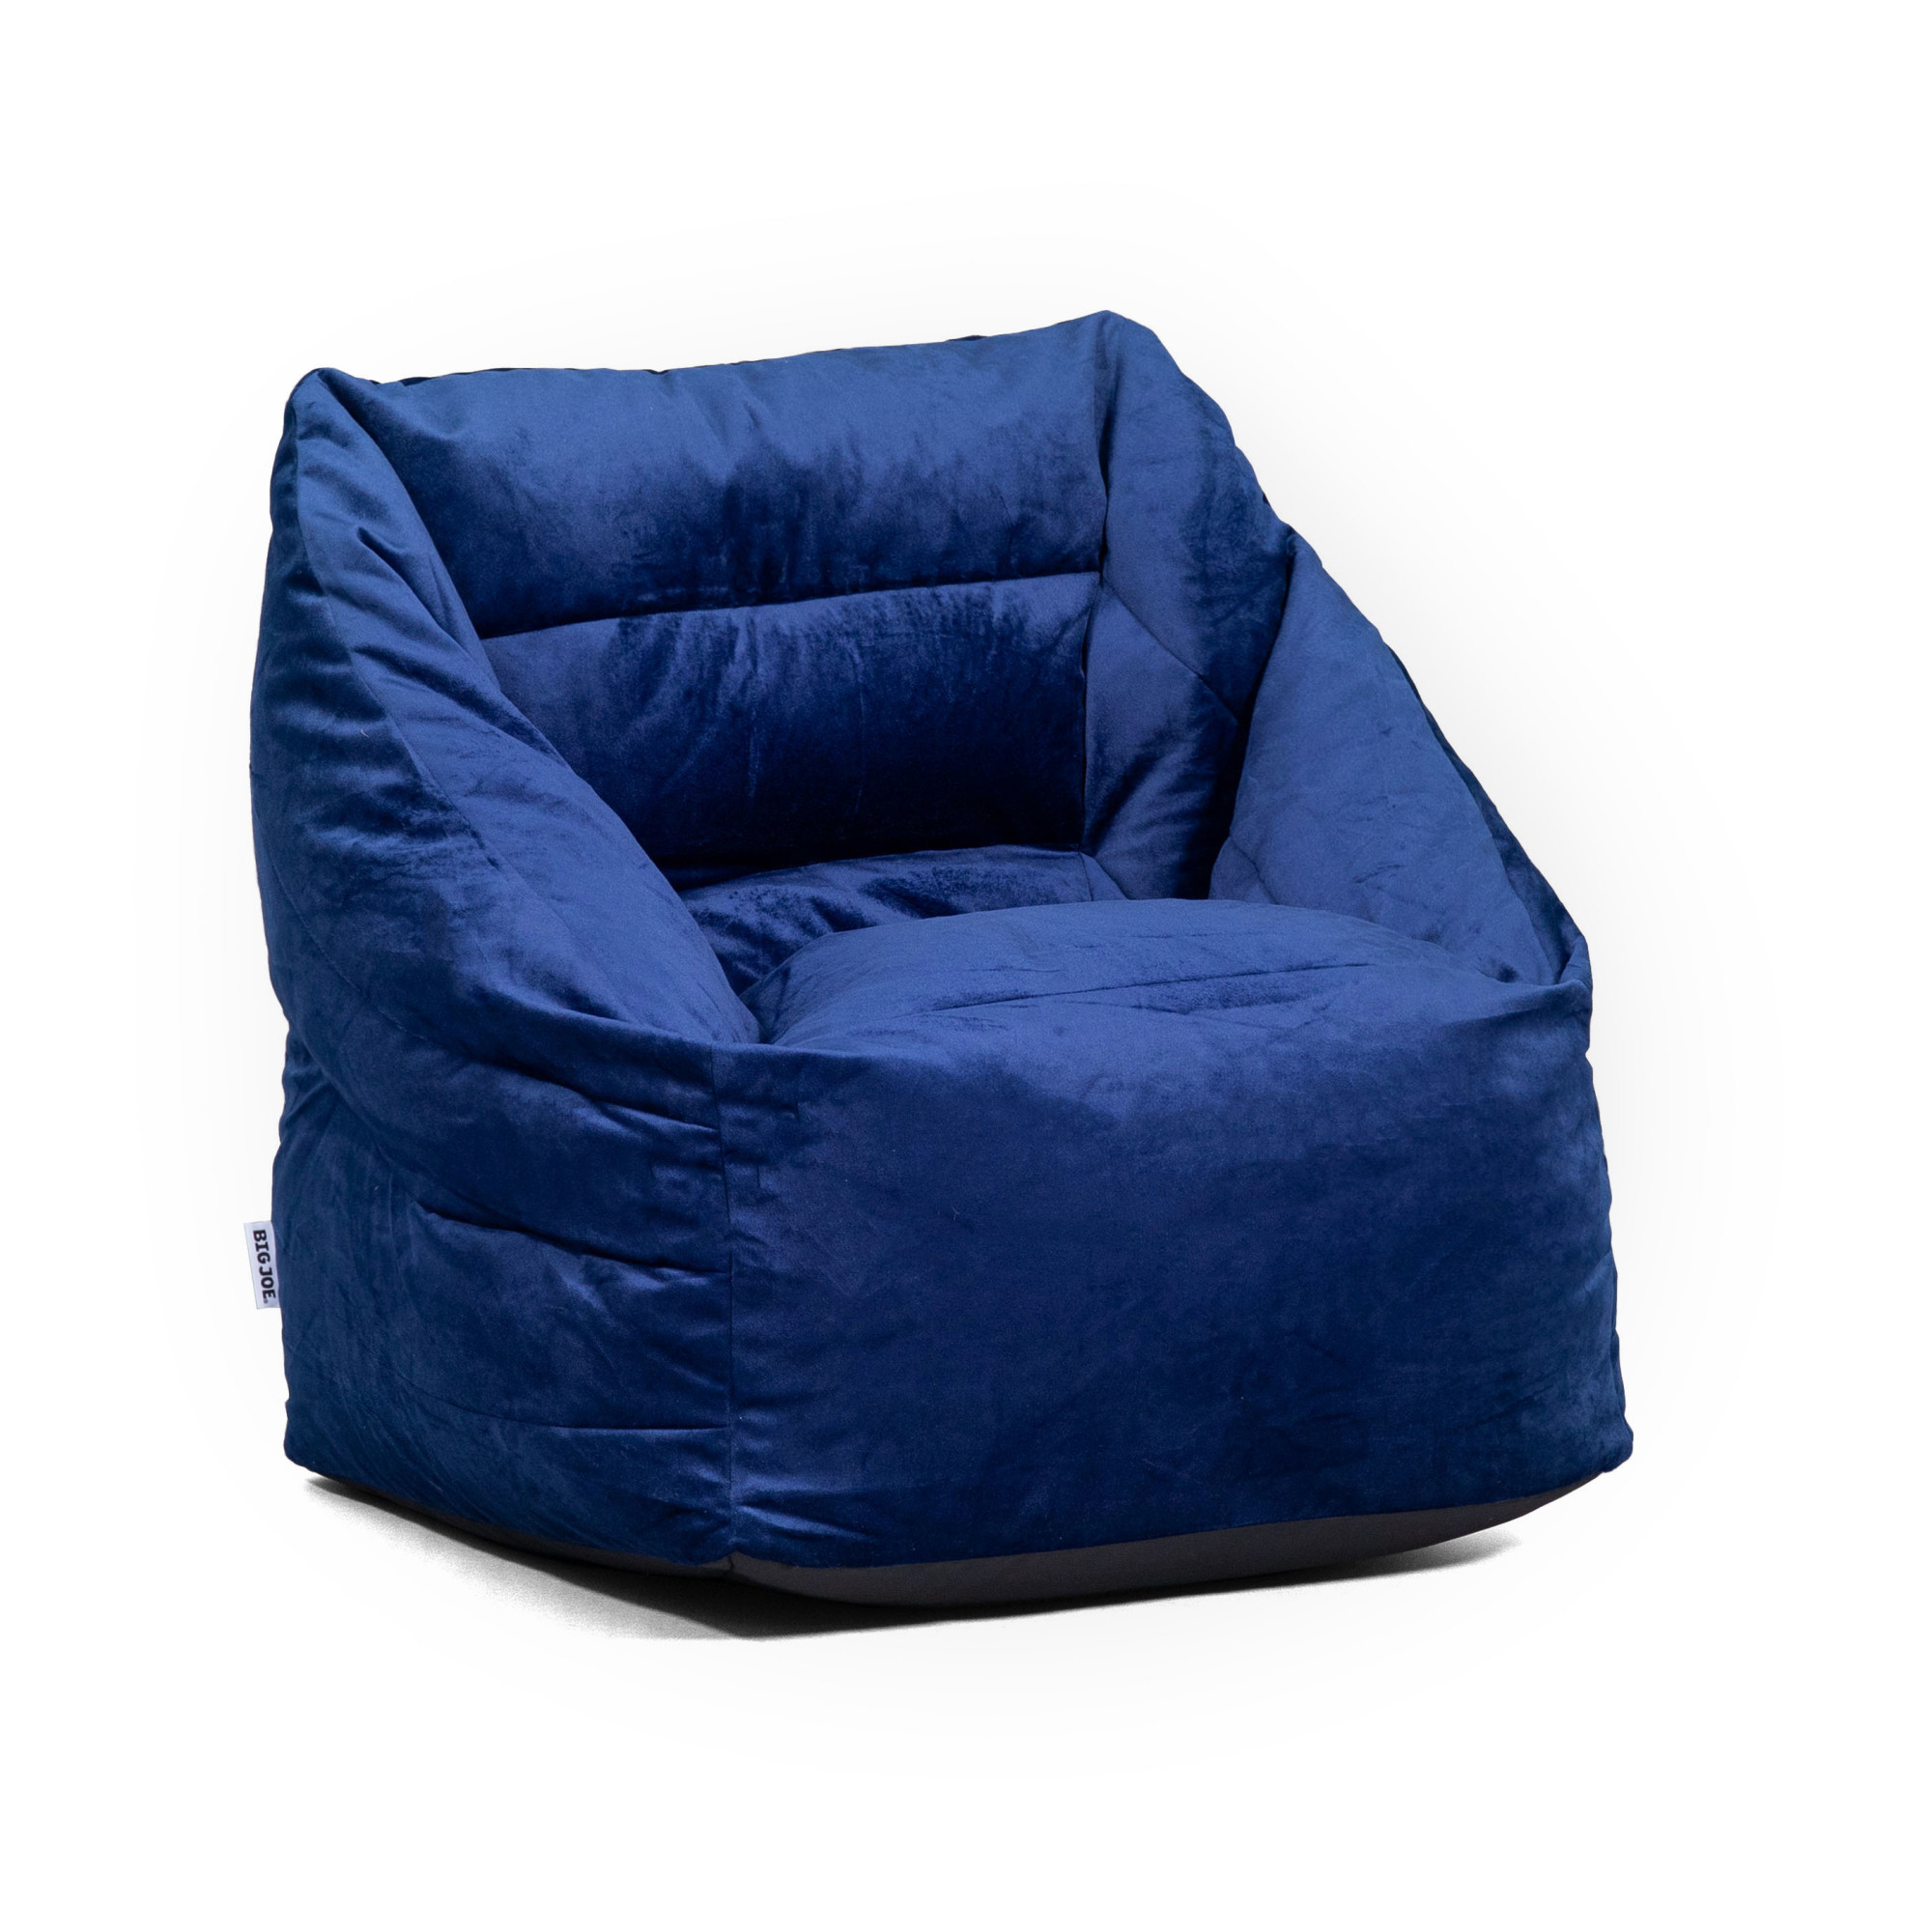 Big Joe Aurora Bean Bag Chair, Deep Navy Velvet, Soft Polyester, 2.5 feet - image 2 of 6